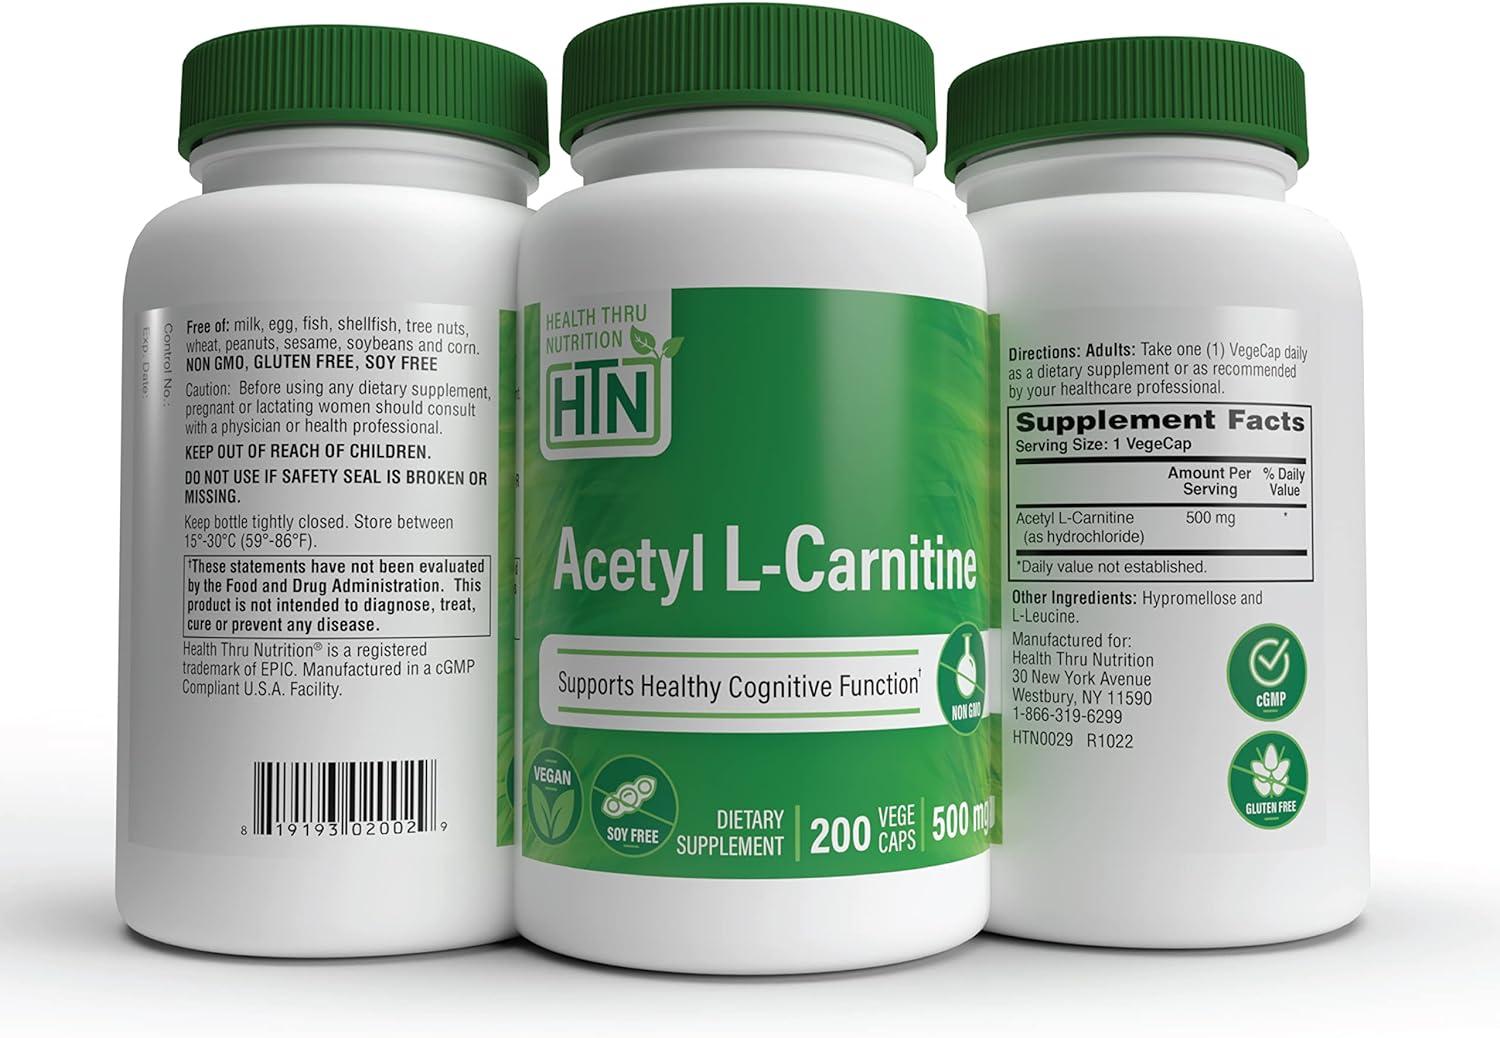 L-Carnitine, 500 mg, 30 Vegetarian Capsules